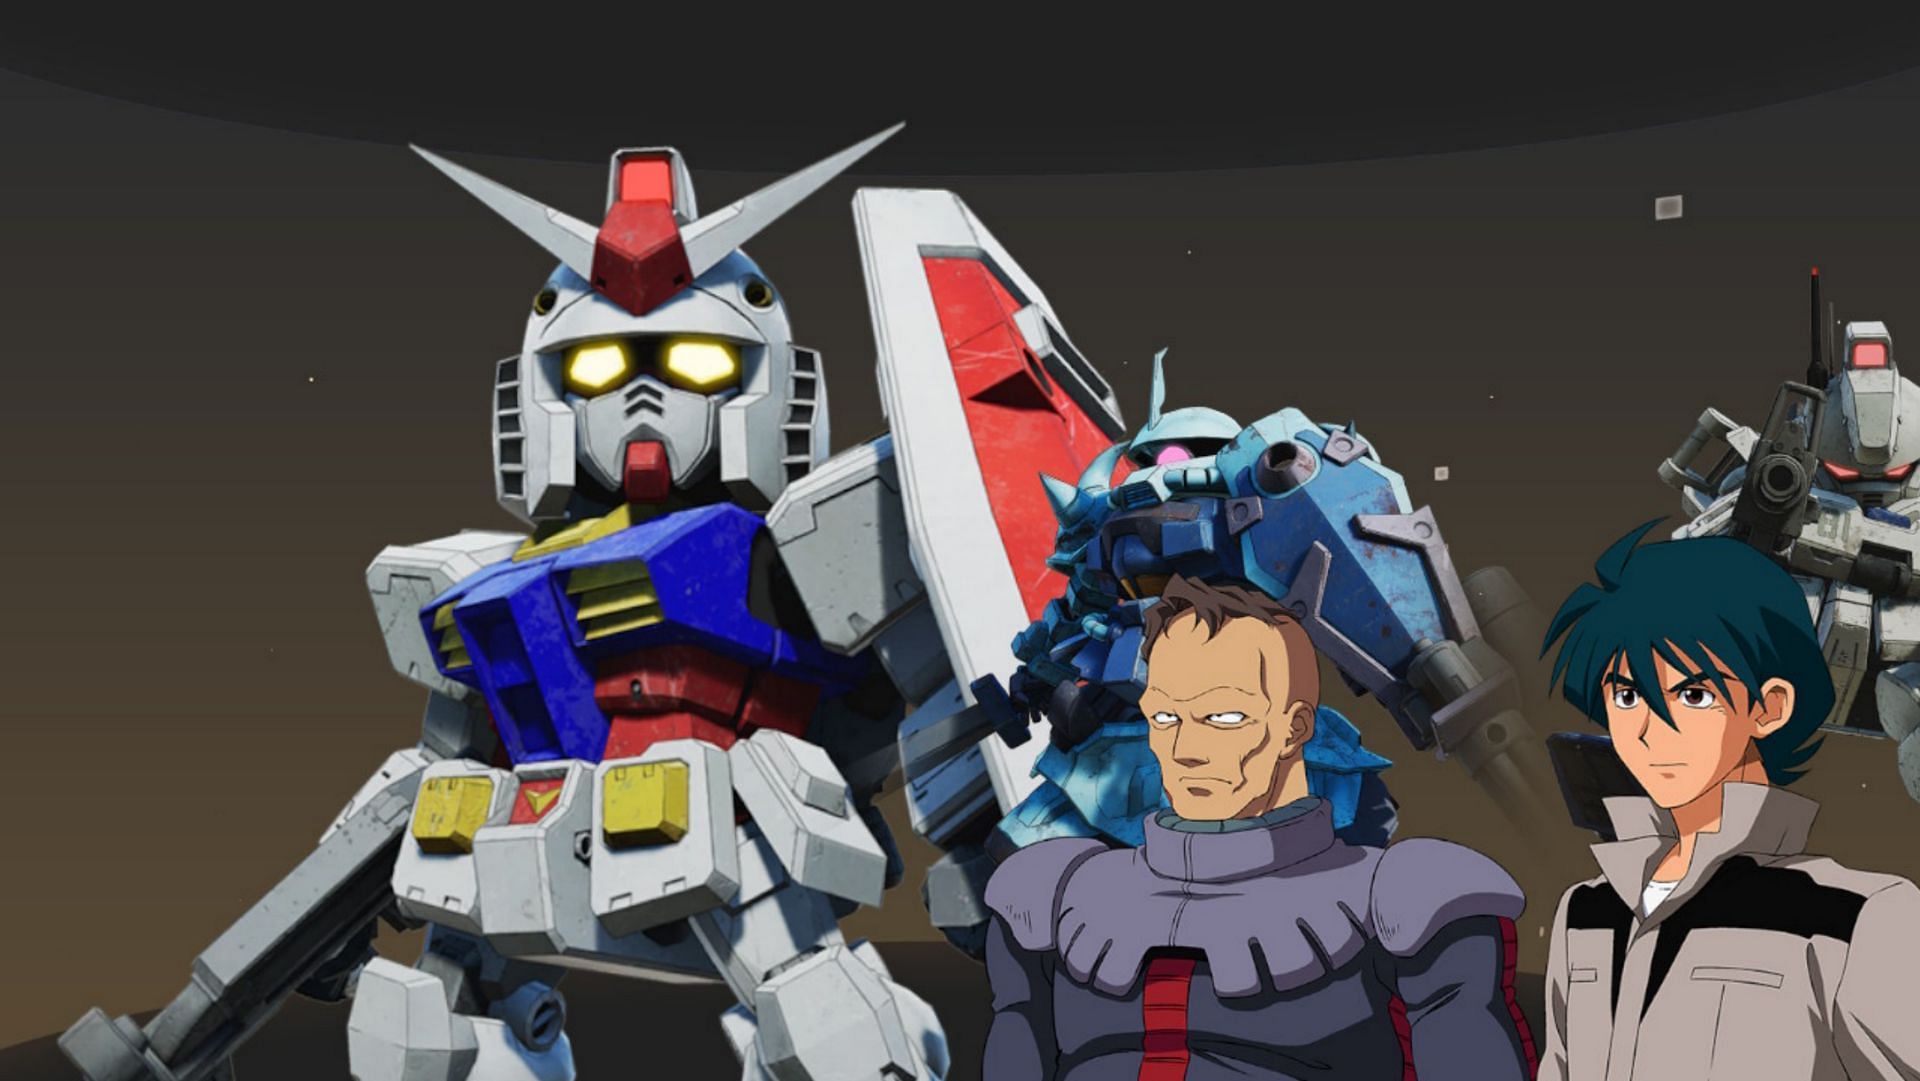 SD Gundam Battle Alliance is fun, but it was plagued by unfortunate crashes (Image via Bandai Namco)